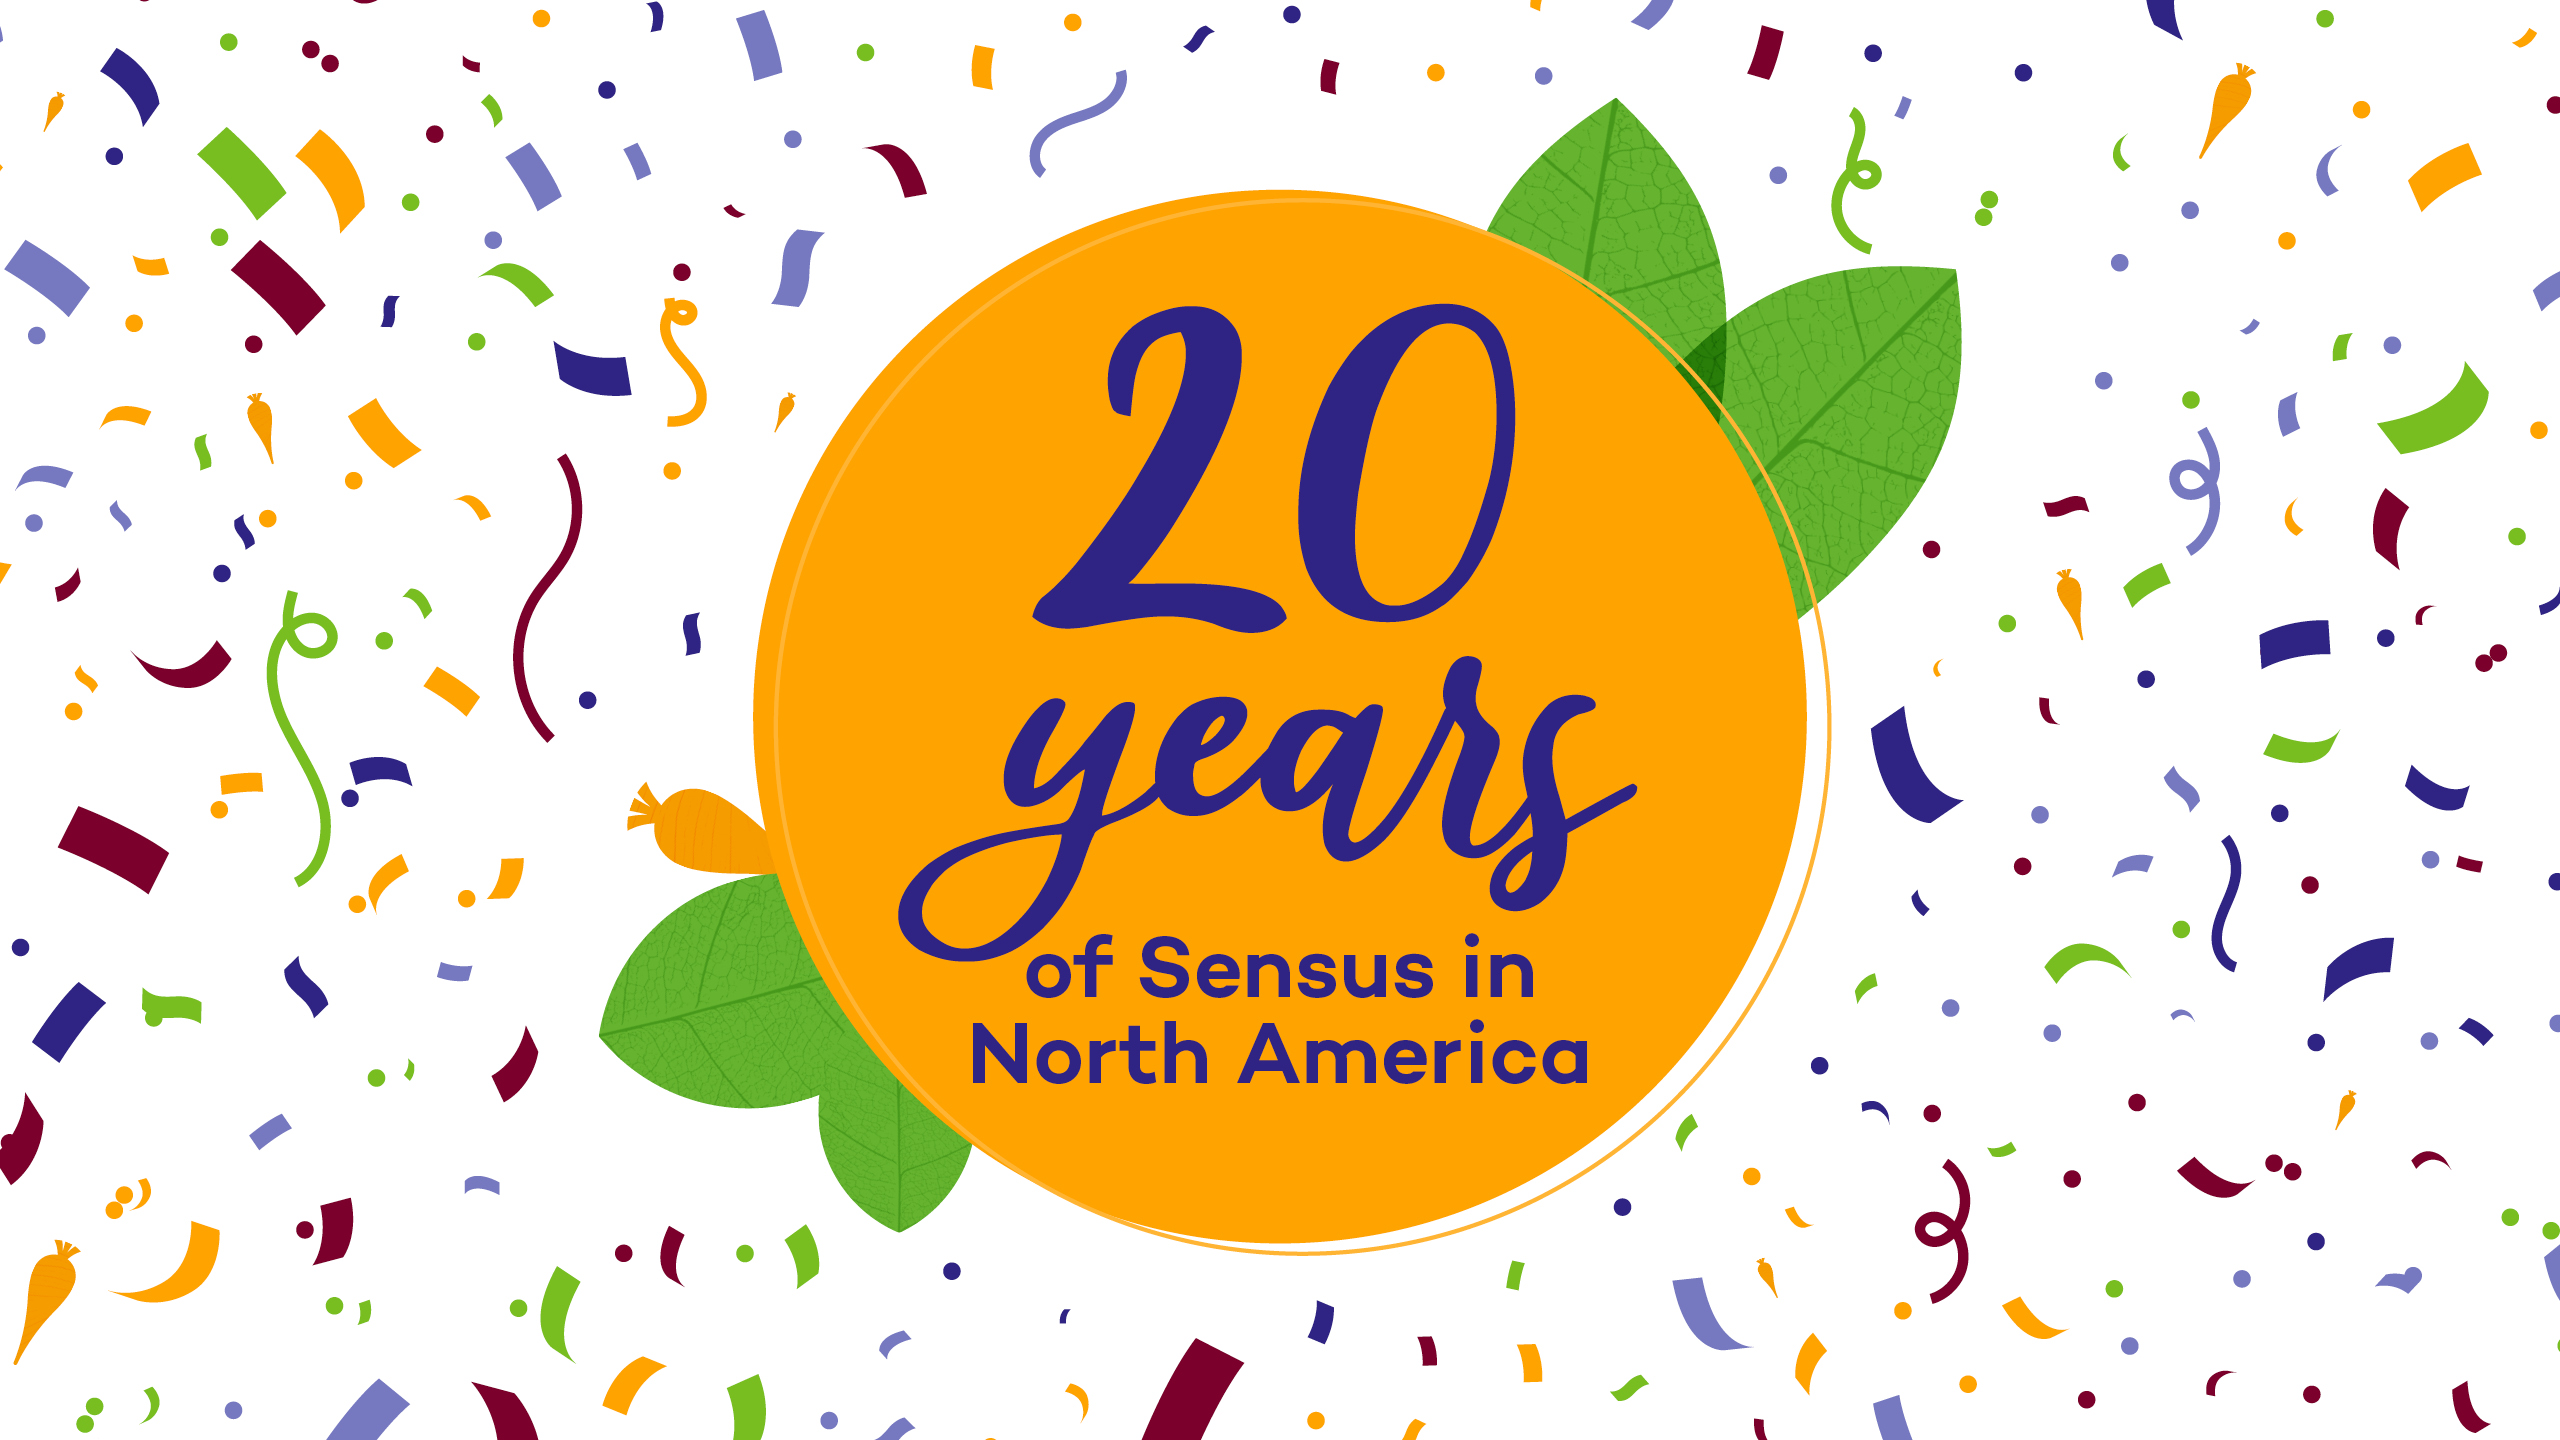 20 years of Sensus in North America